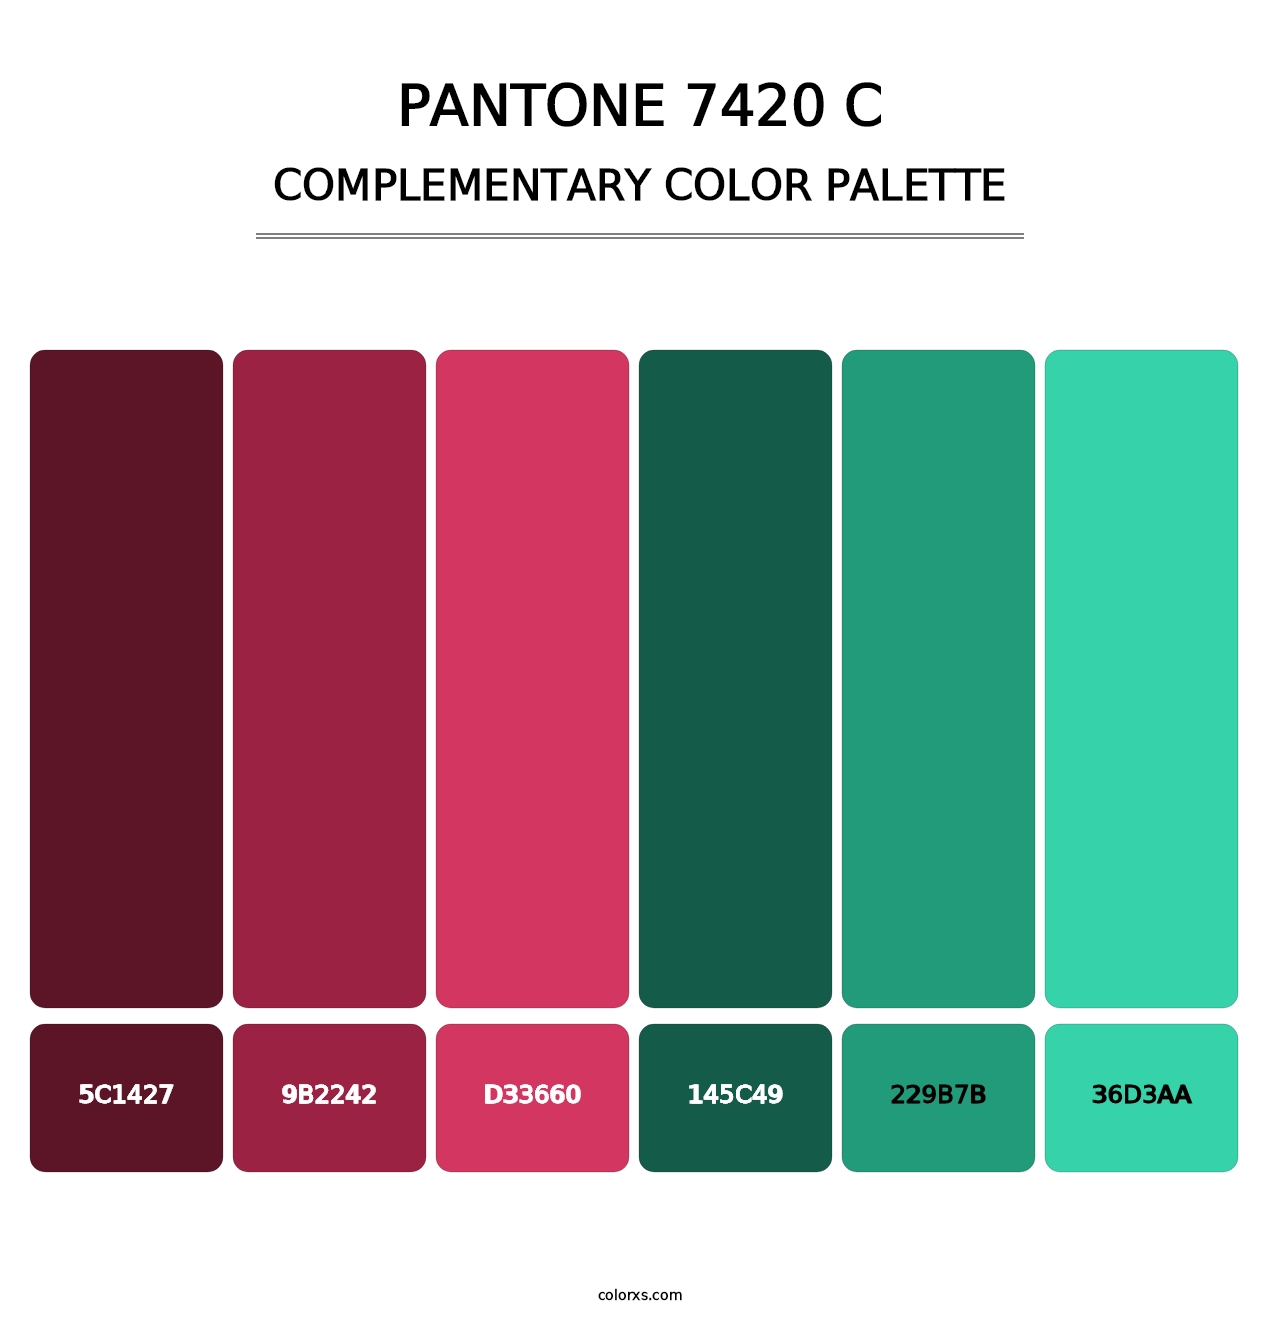 PANTONE 7420 C - Complementary Color Palette